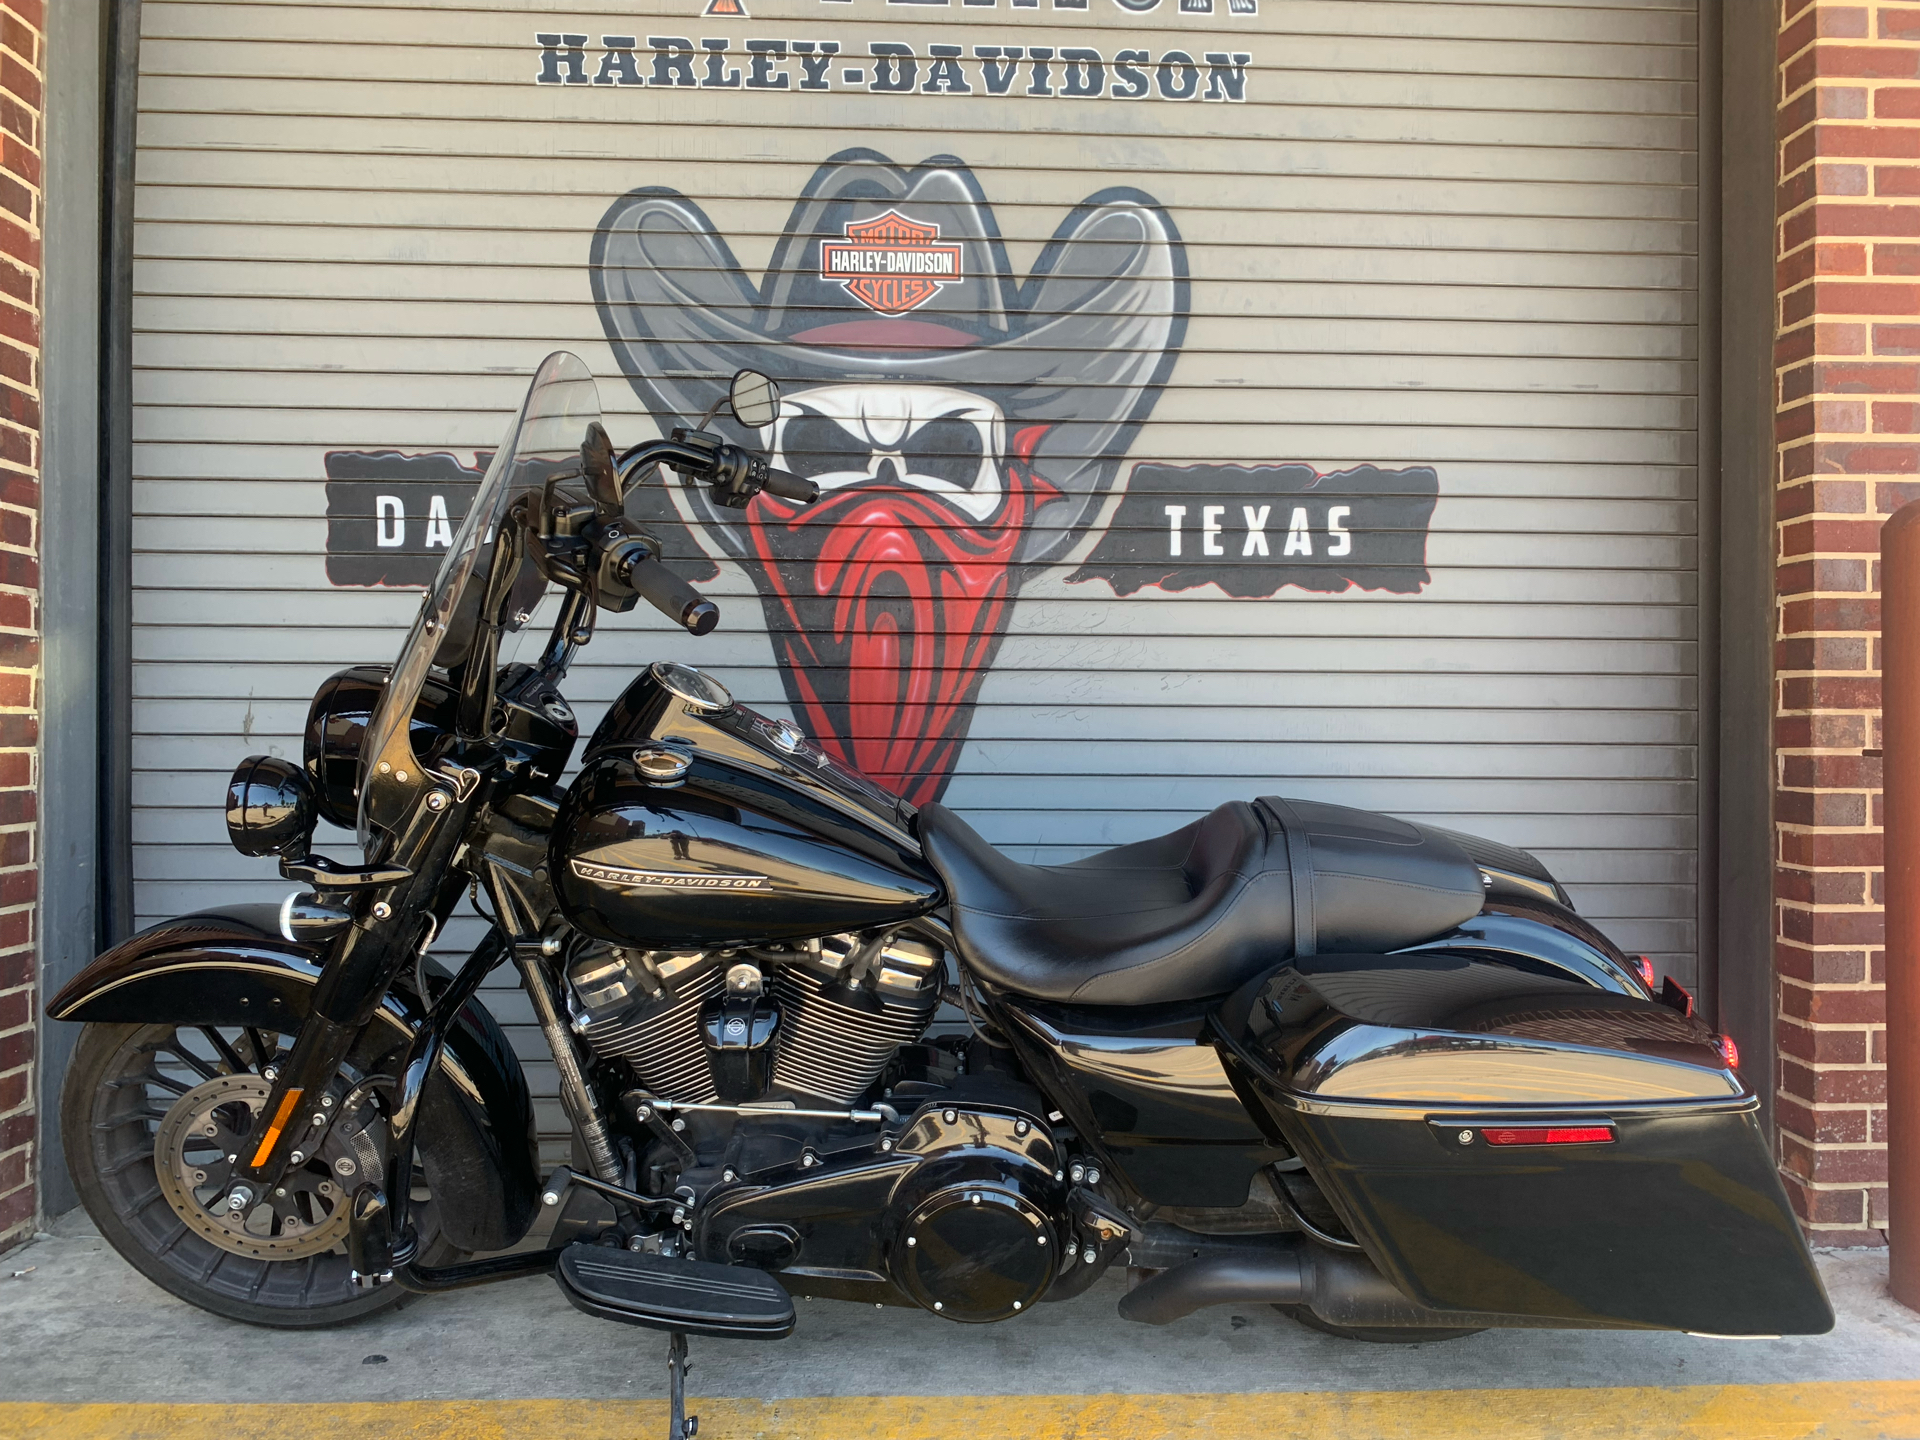 2017 Harley-Davidson Road King® Special in Carrollton, Texas - Photo 10